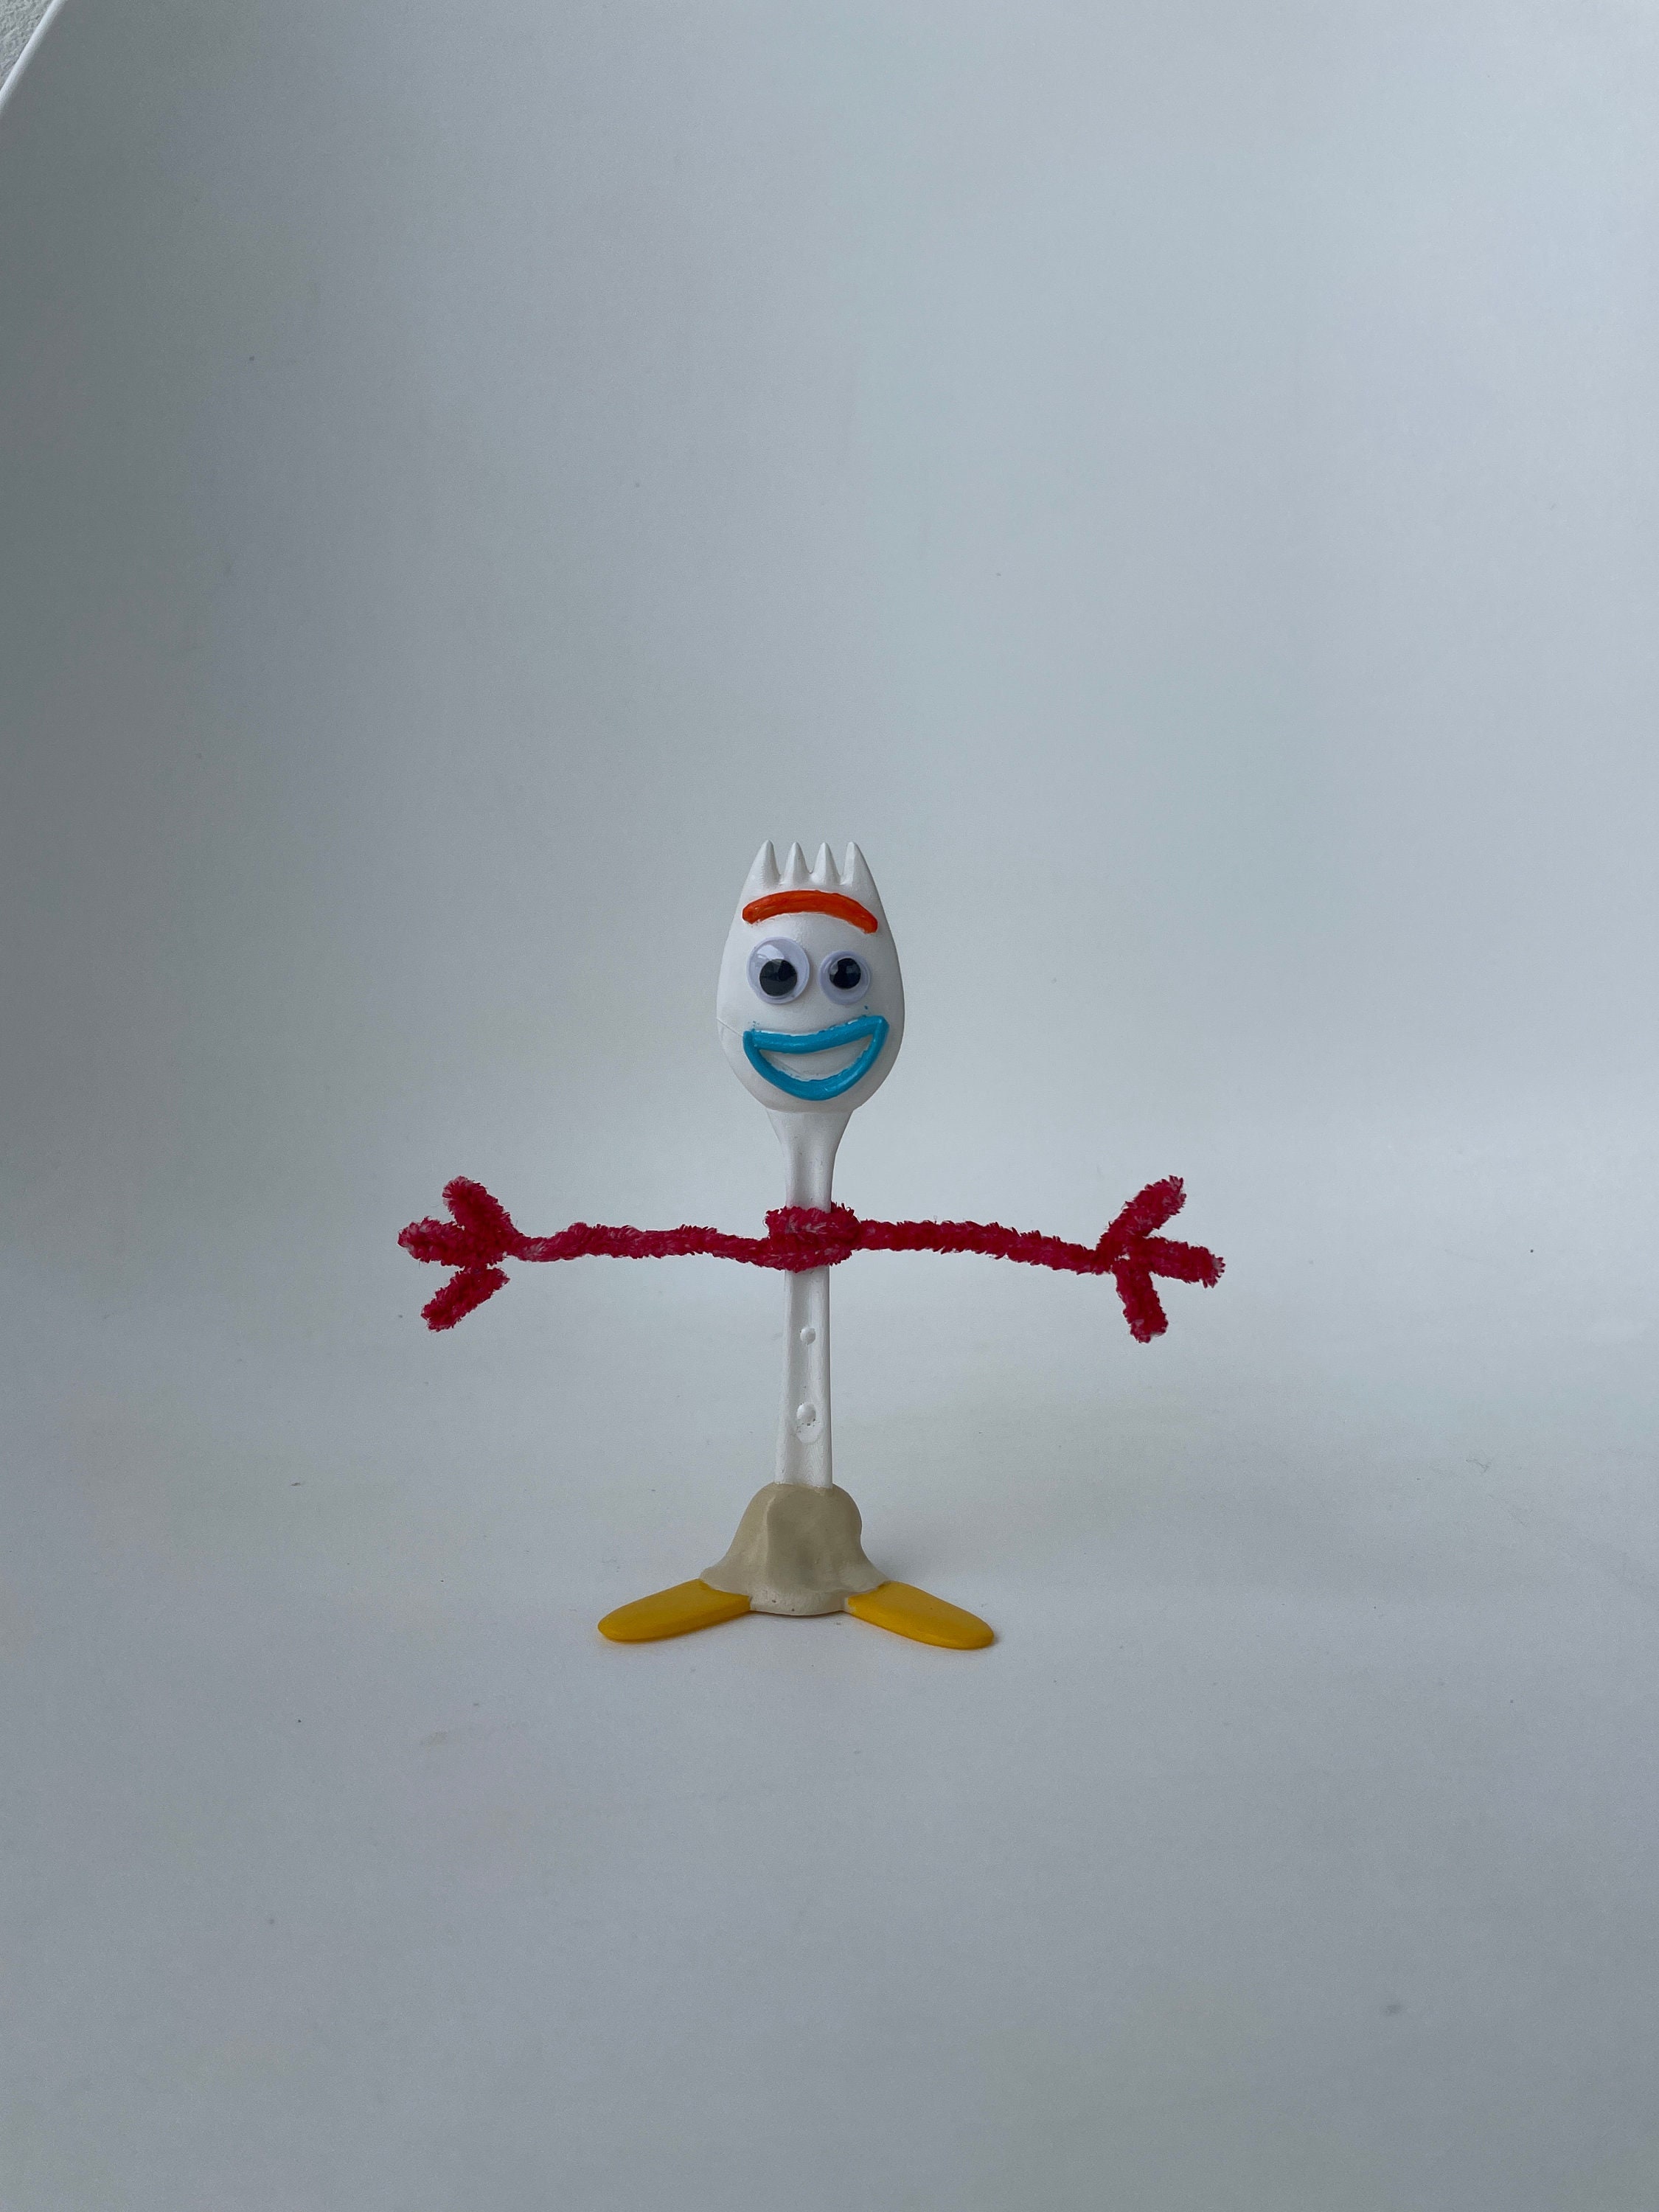 Forky Toy Story Pattern. Custom Plush Inspired by Toy Story Forky Kit.  Forky Plush Handmade Doll 